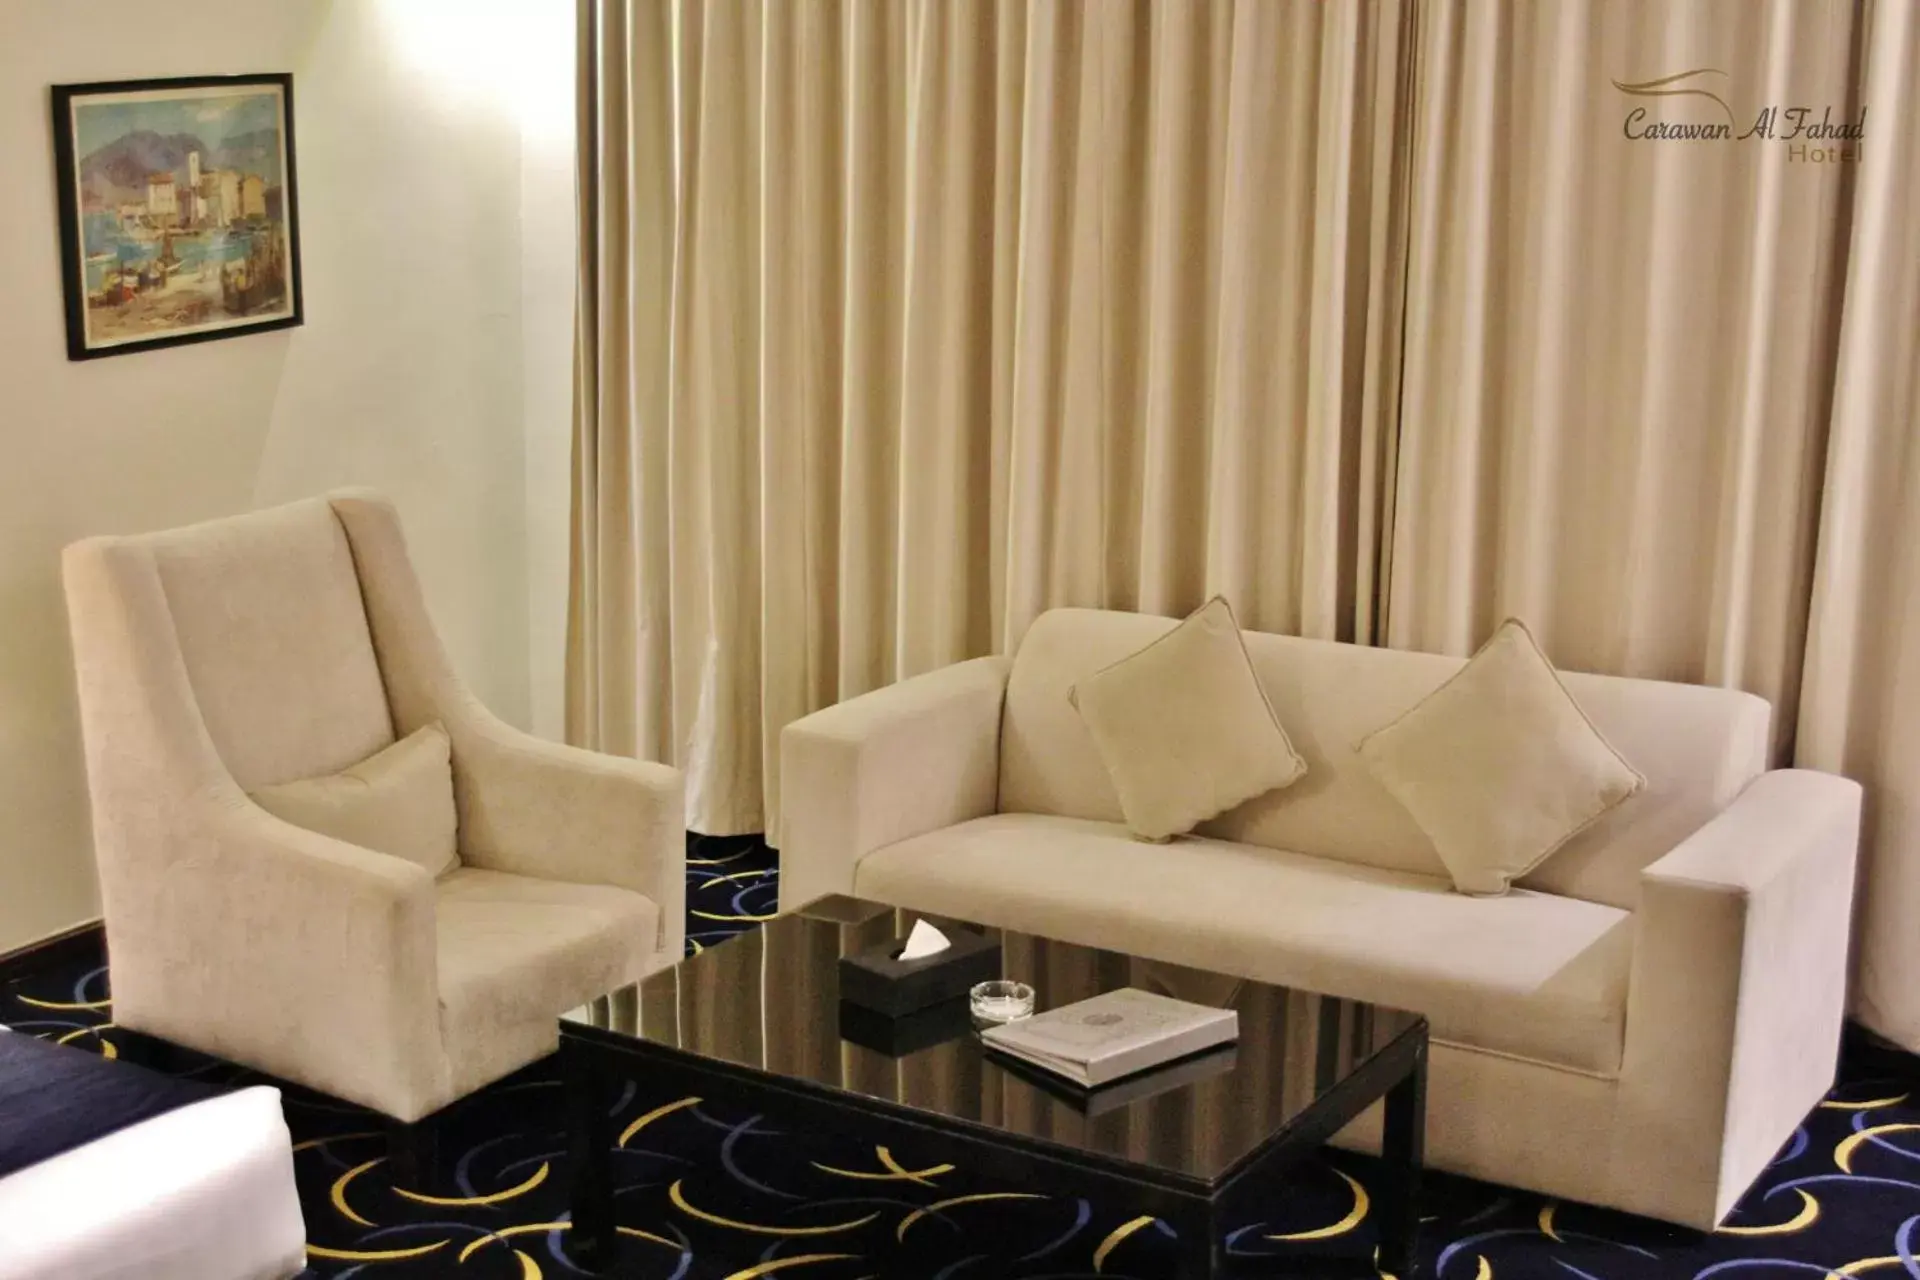 Seating Area in Carawan Al Fahad Hotel